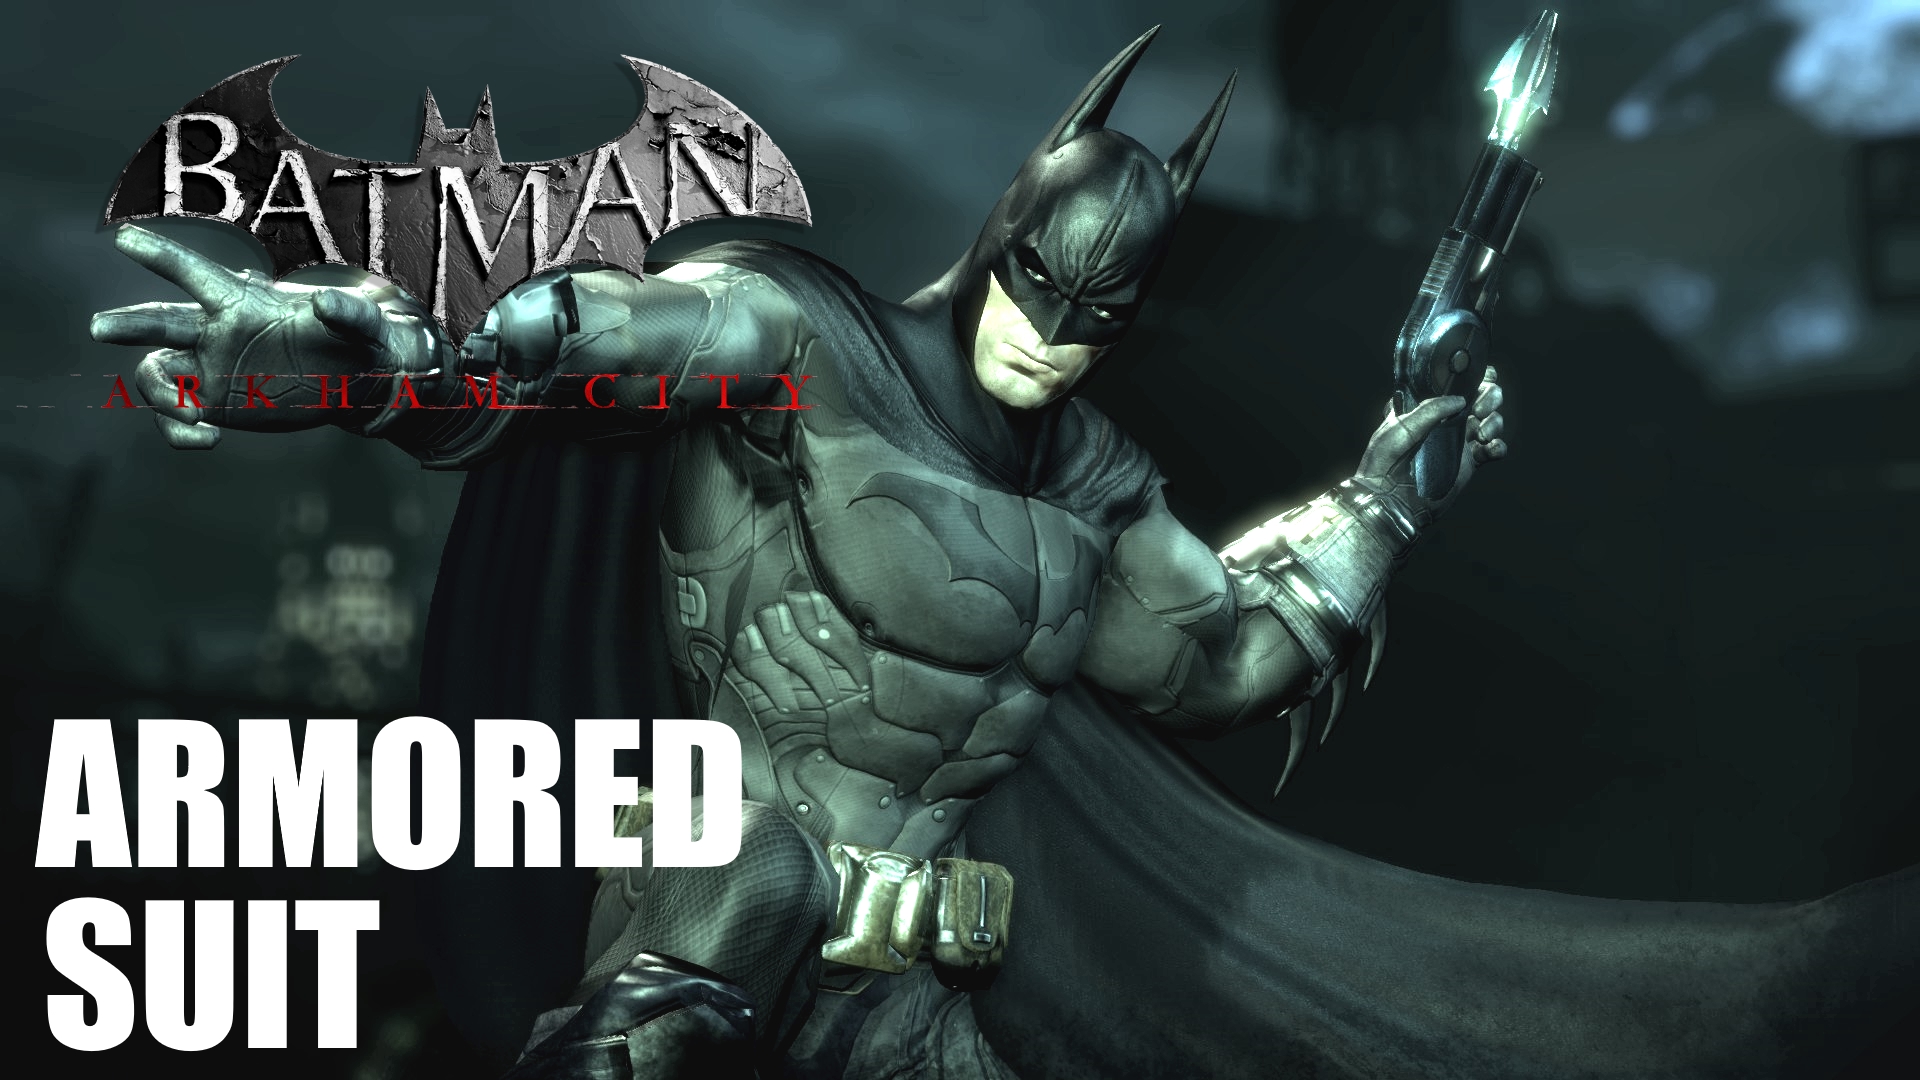 Red Lantern skin mod for Batman Arkham City by thebatmanhimself on